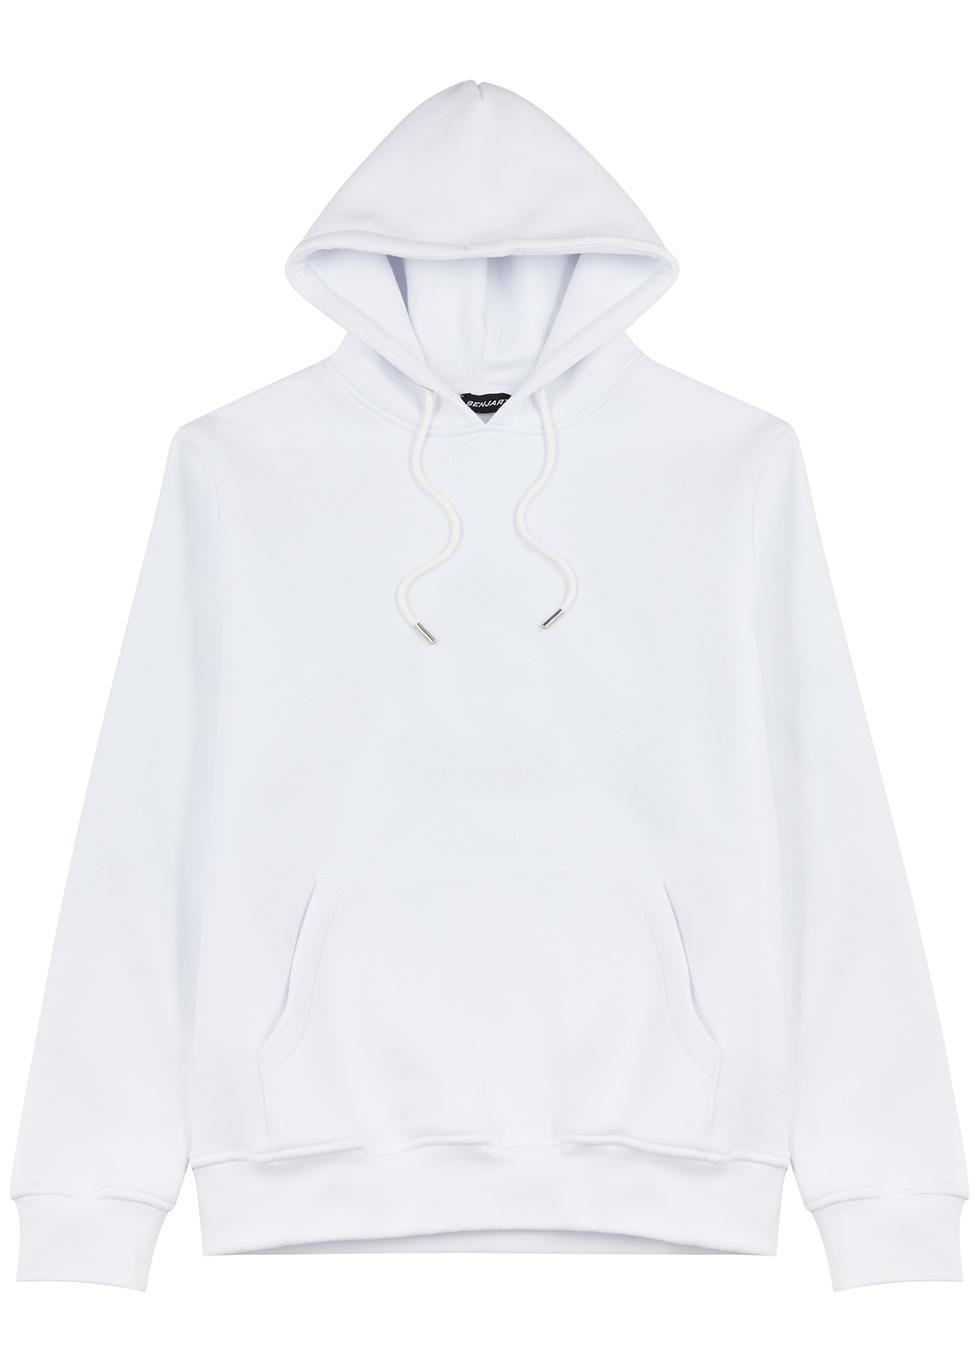 Emblem Splash hoodied cotton-blend sweatshirt by BENJART